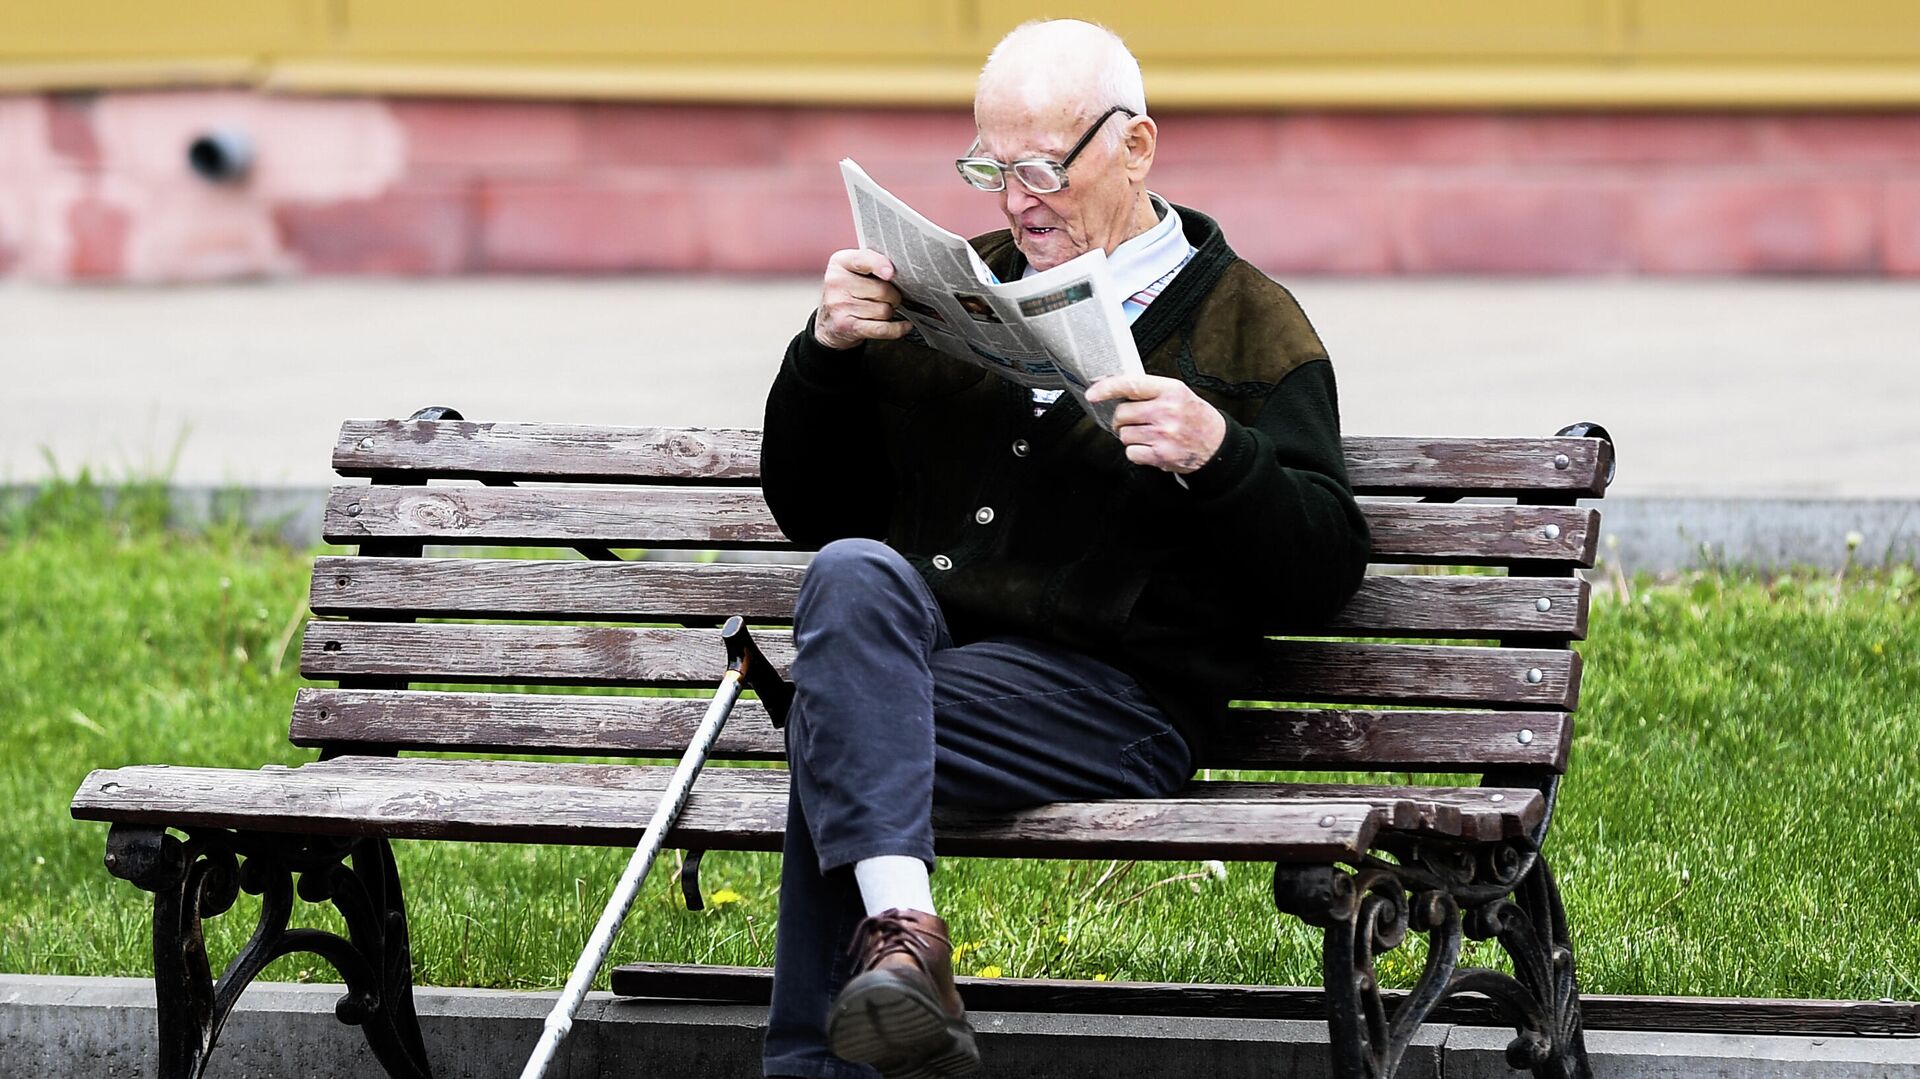 Мужчина читает газету на улице на лавочке в Москве  - РИА Новости, 1920, 19.05.2021